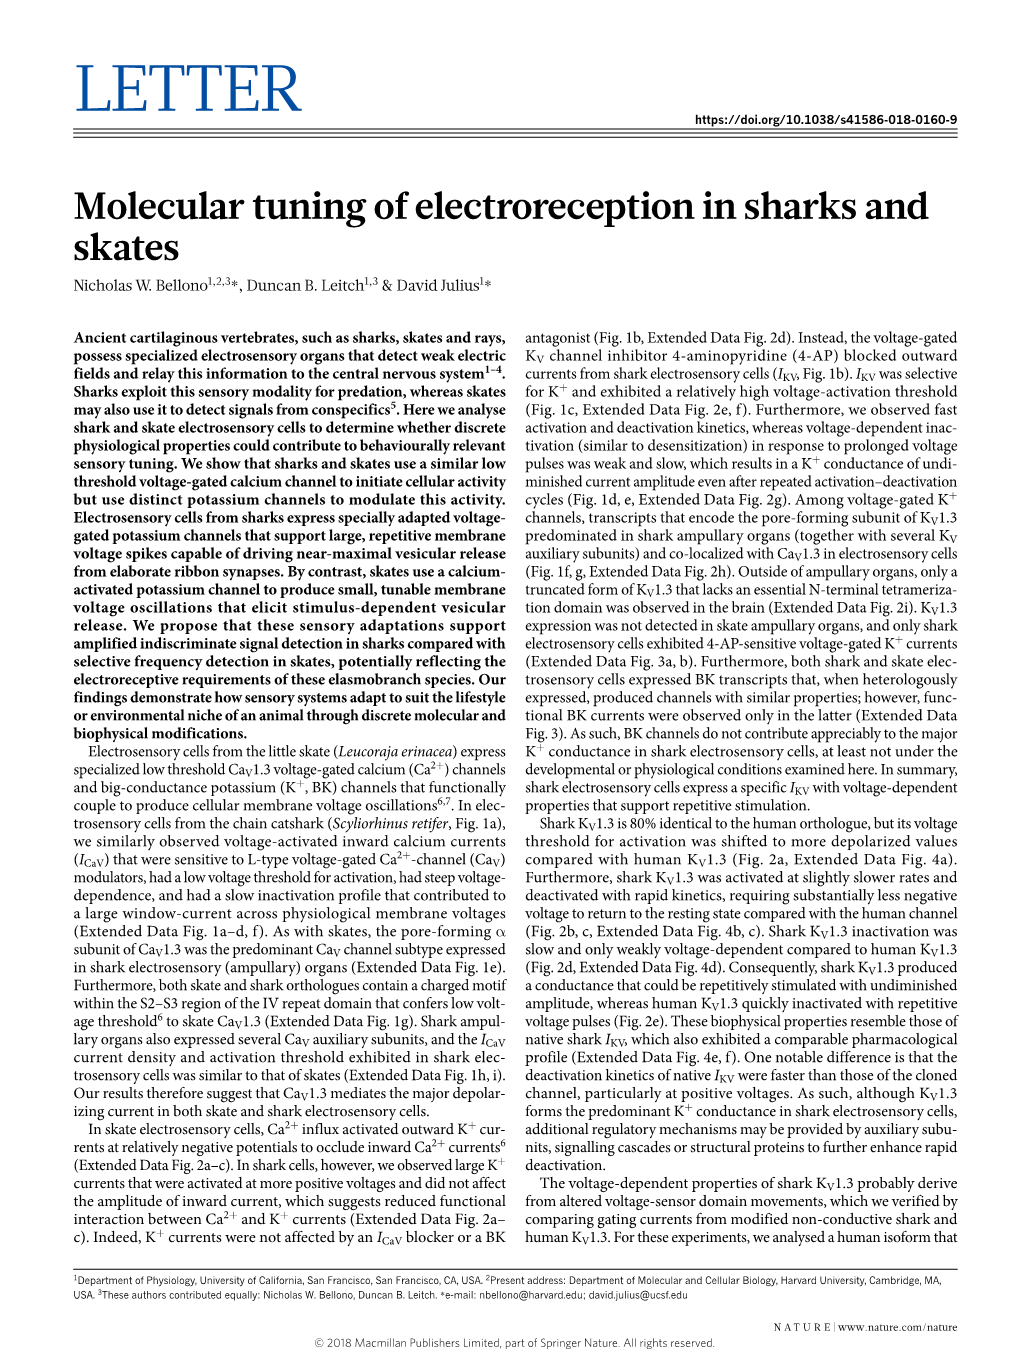 Molecular Tuning of Electroreception in Sharks and Skates Nicholas W